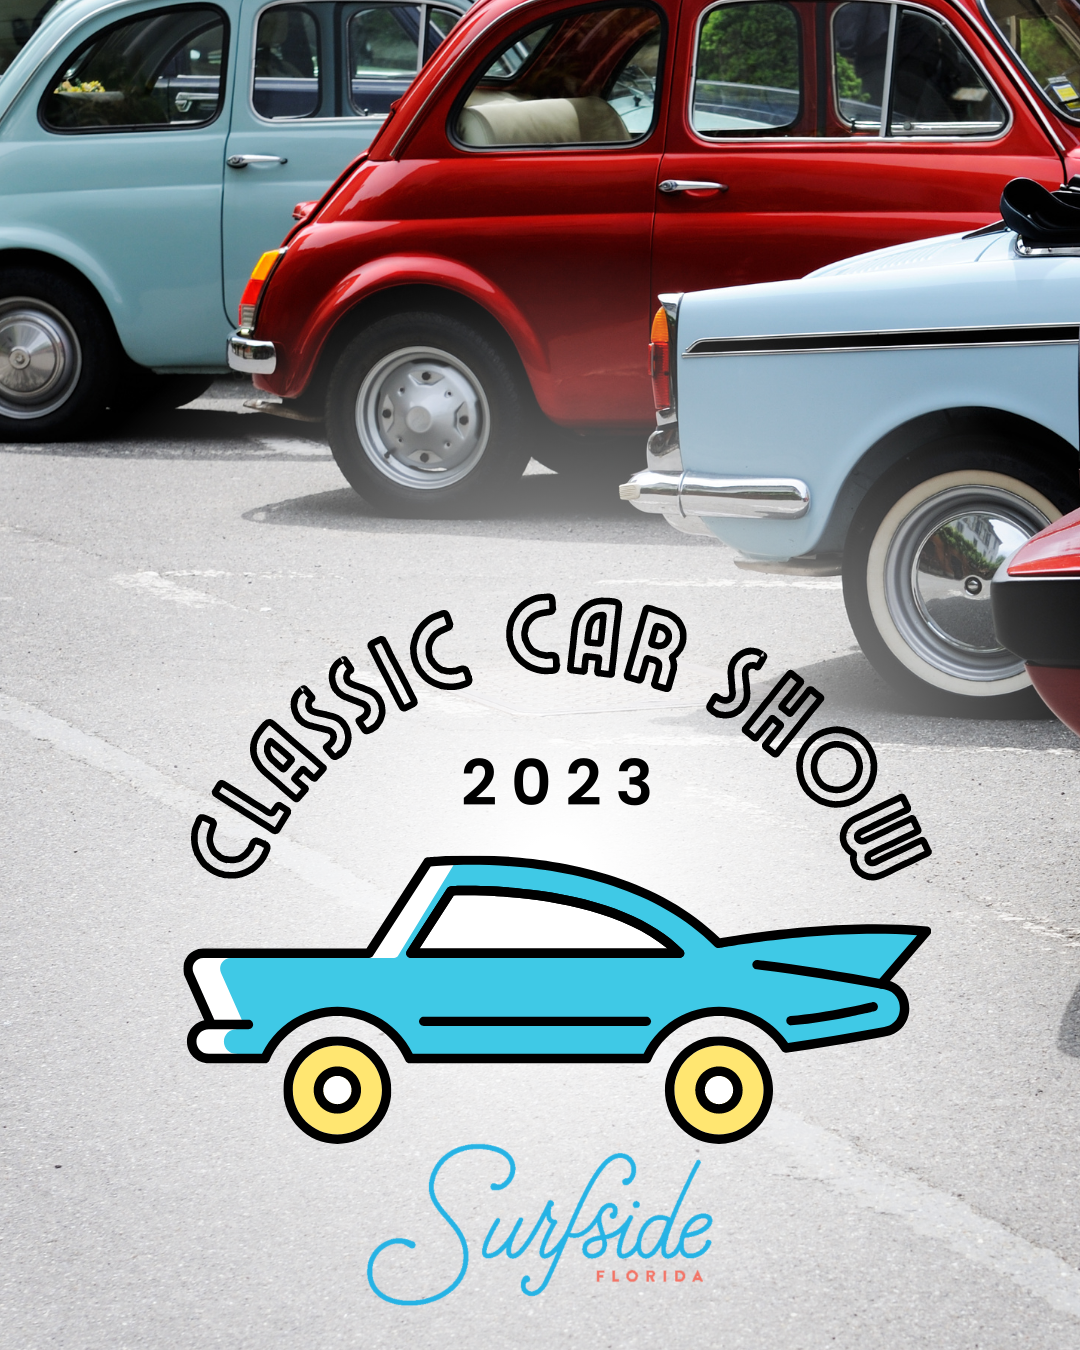 Surfside Classic Car Show 2023